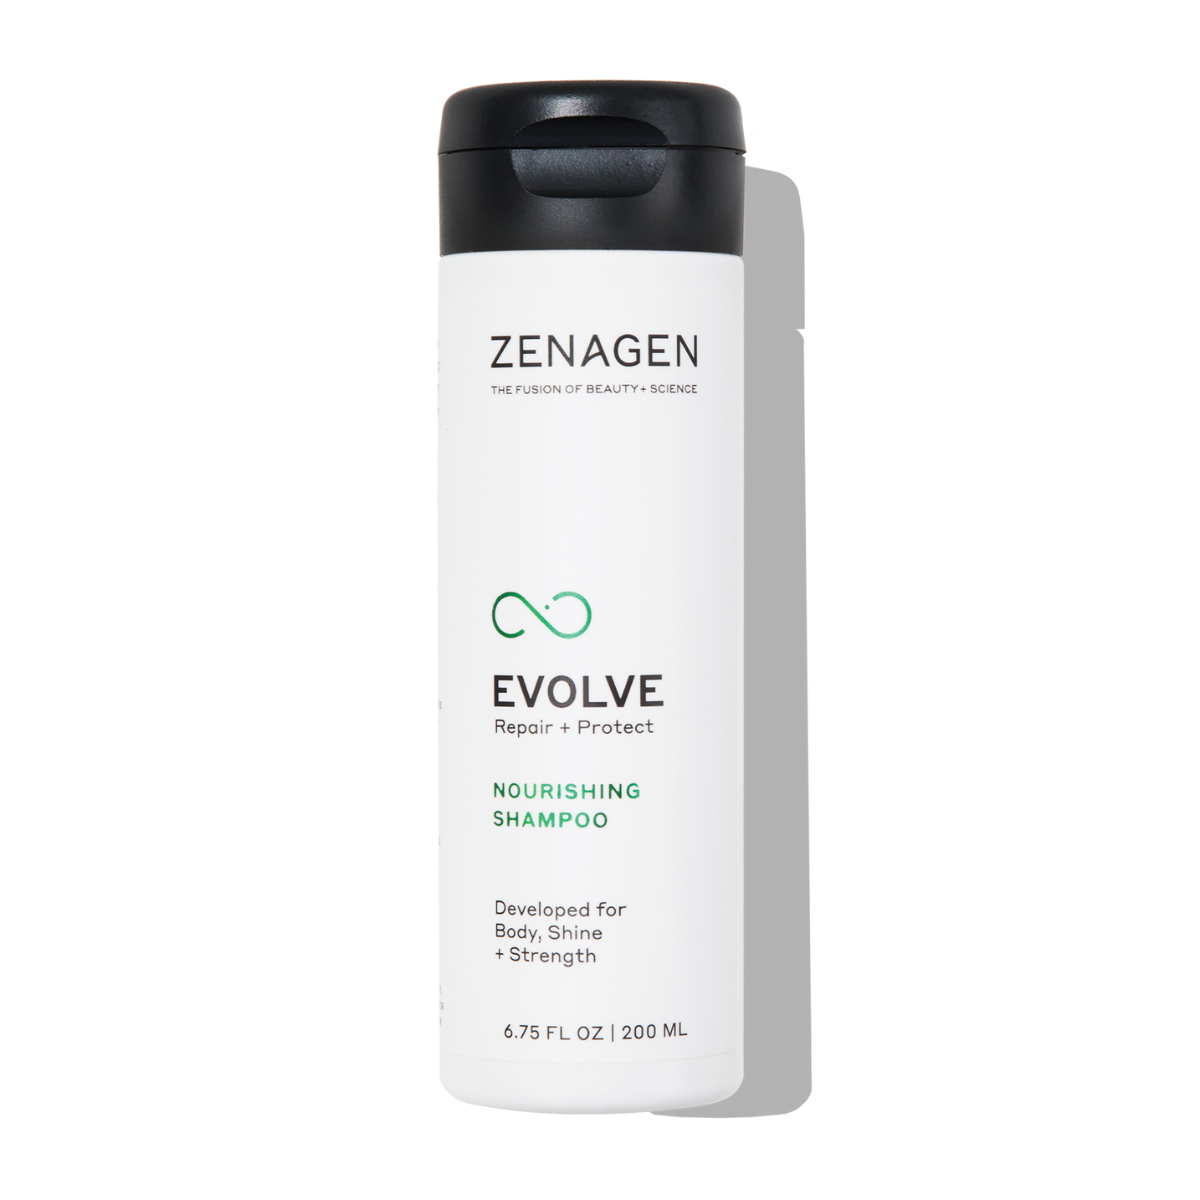 Zenagen Evolve Nourishing Shampoo Shop At Exclusive Beauty